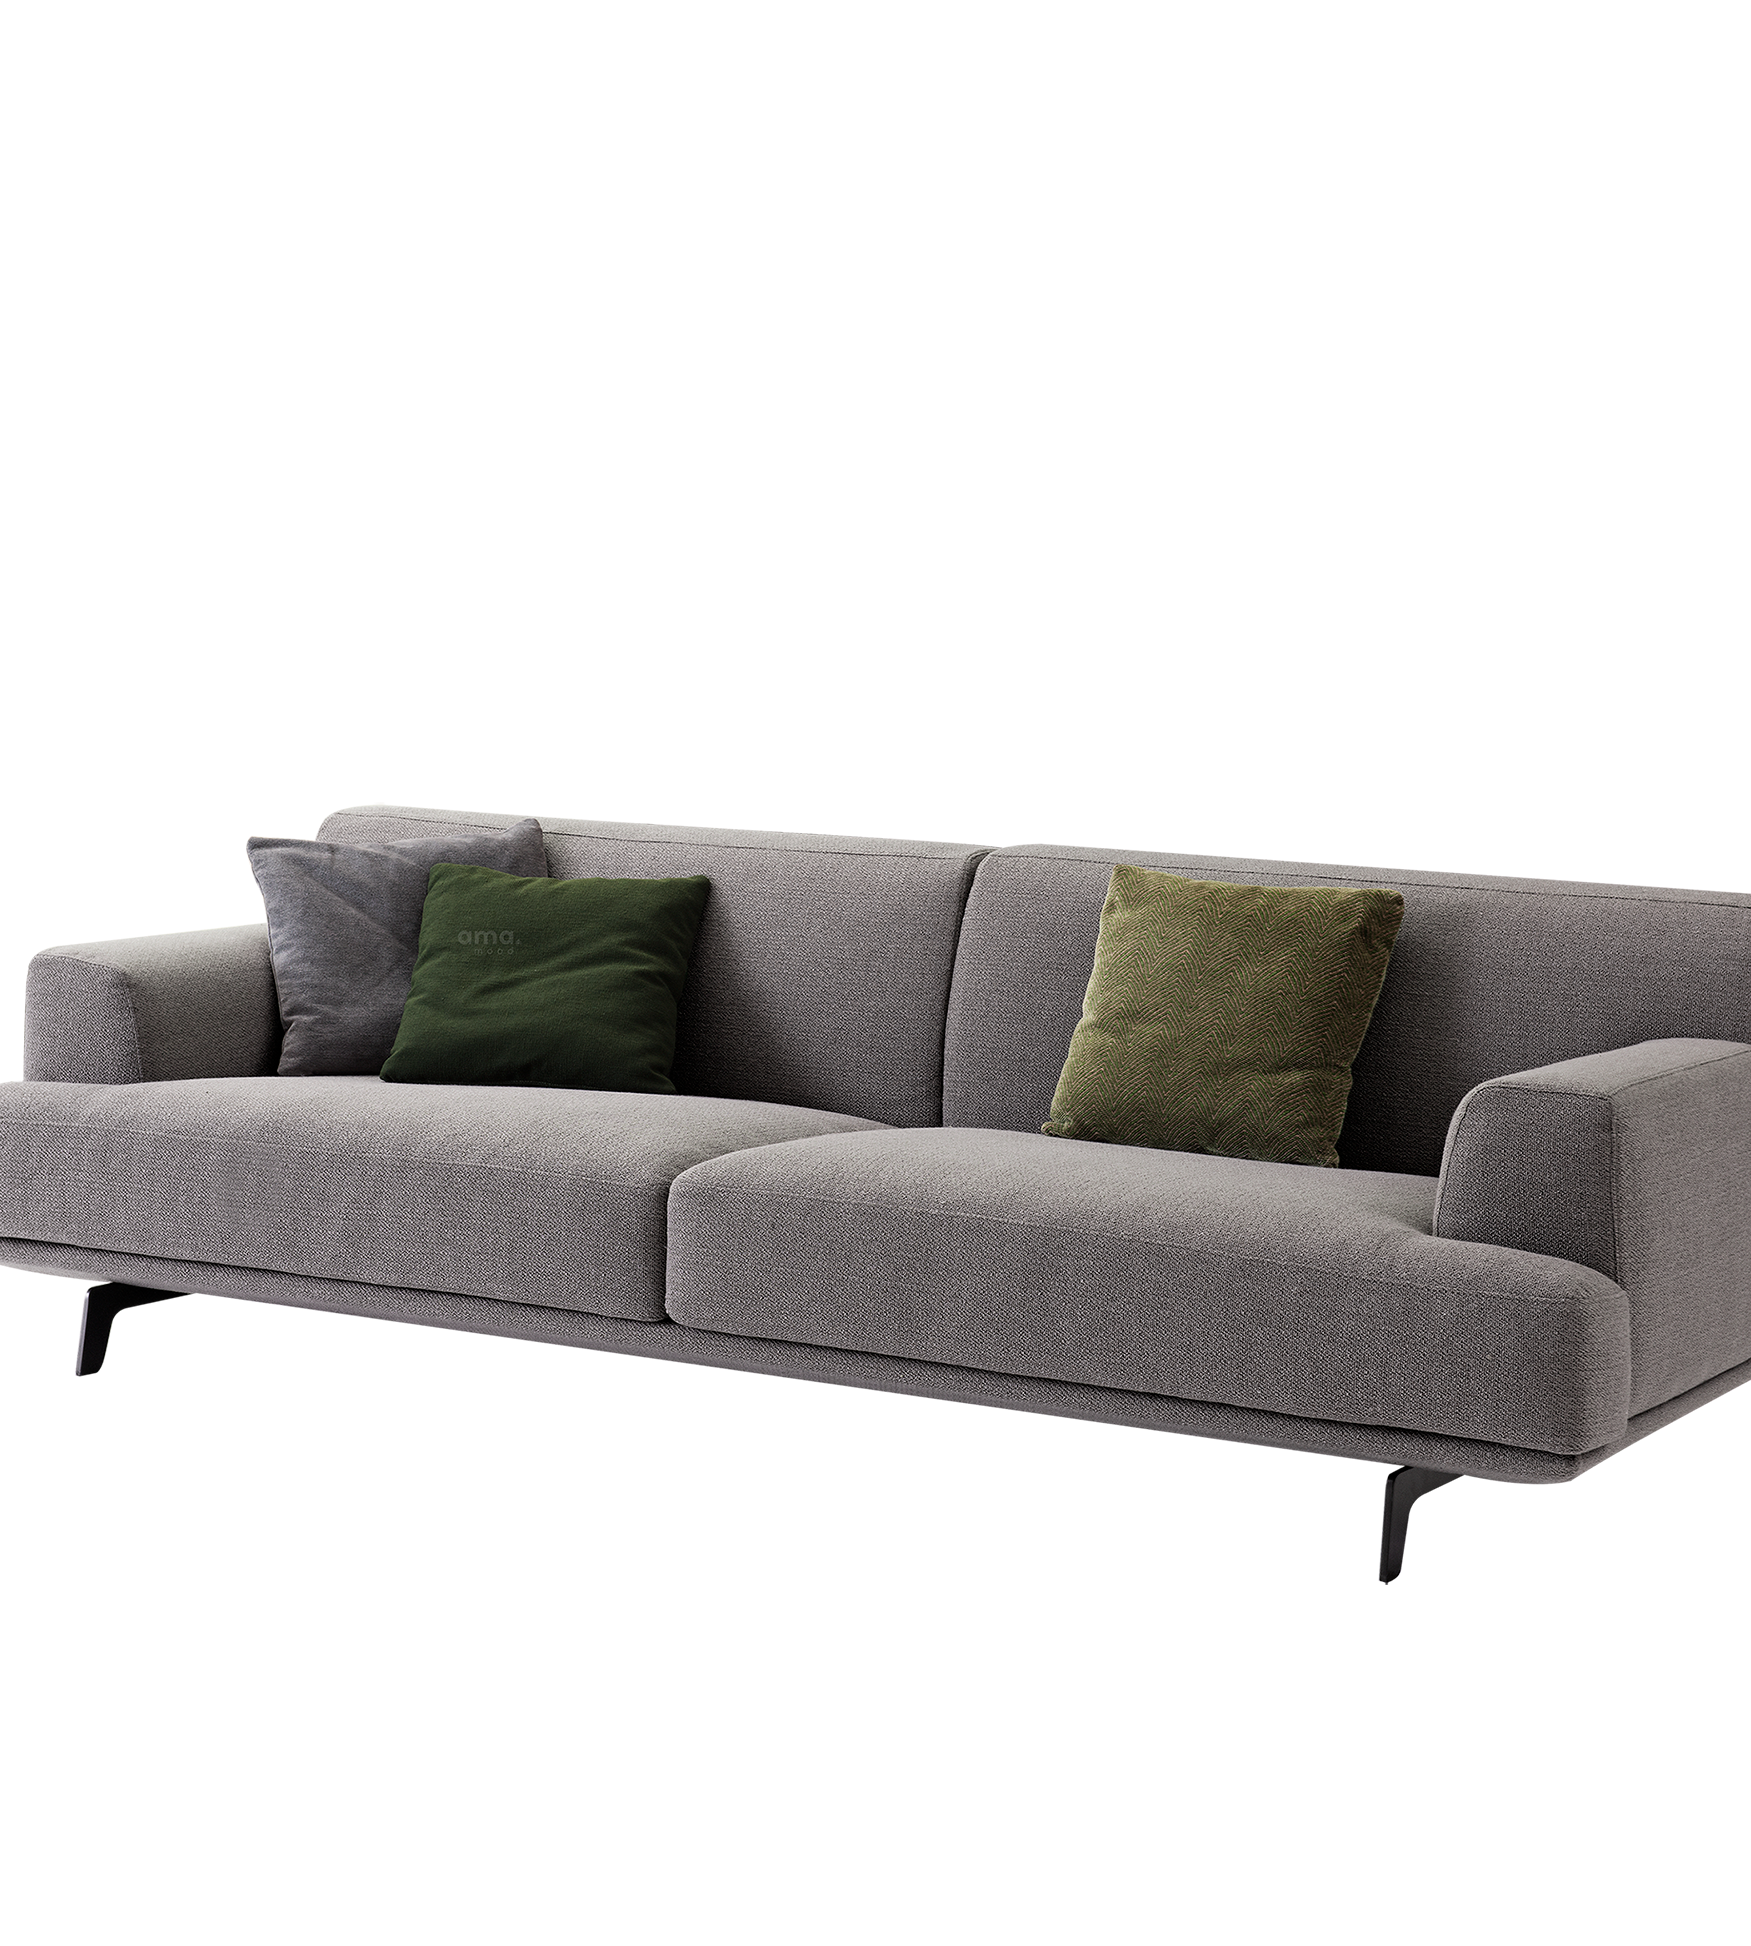 Buy Modern Sofa | Modern Living Room Sofa Set